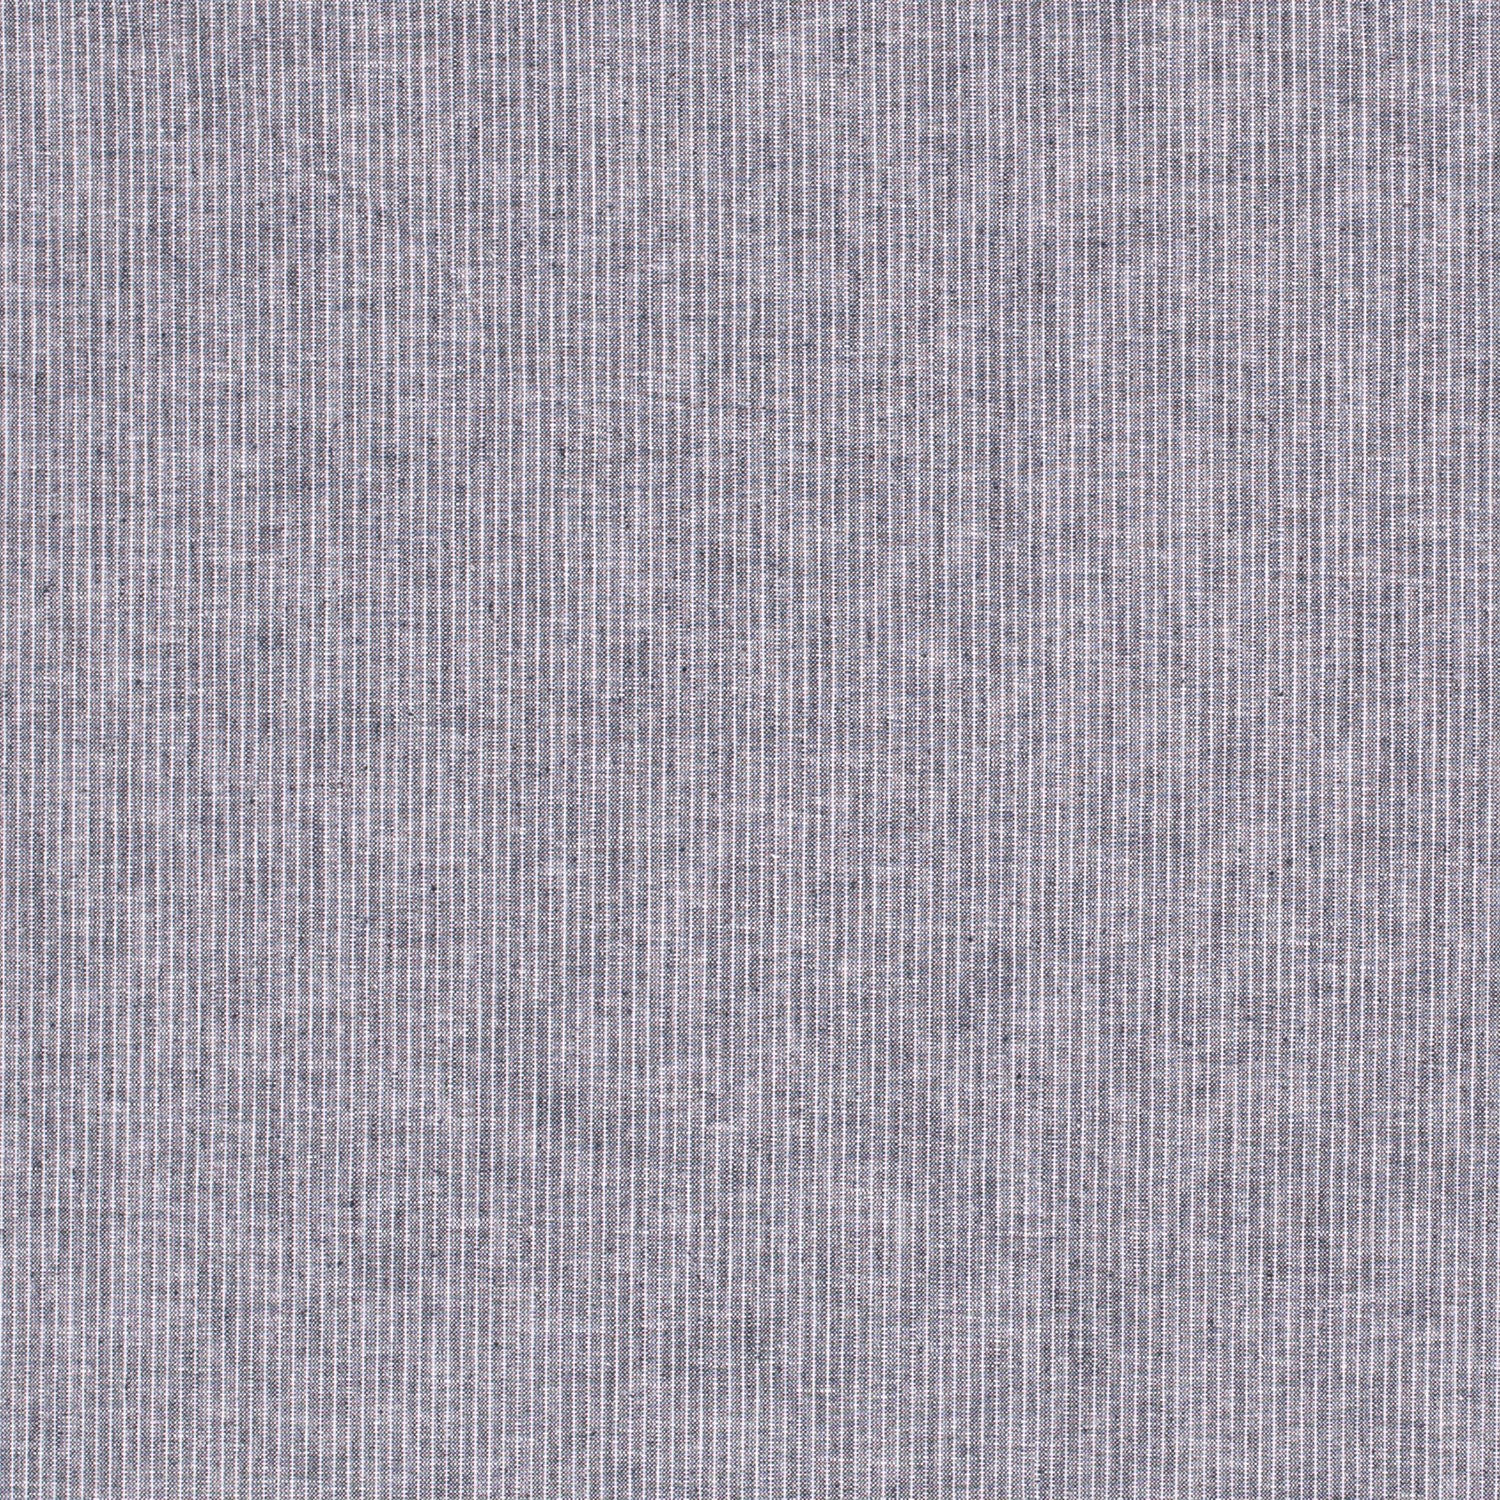 Leinen-Bw-Popeline, Micro-Stripes, weiß-blau, 55%Li, 55% Co, ca. 145cm breit, 150 g/m², Öko-Tex-zertifiziert 